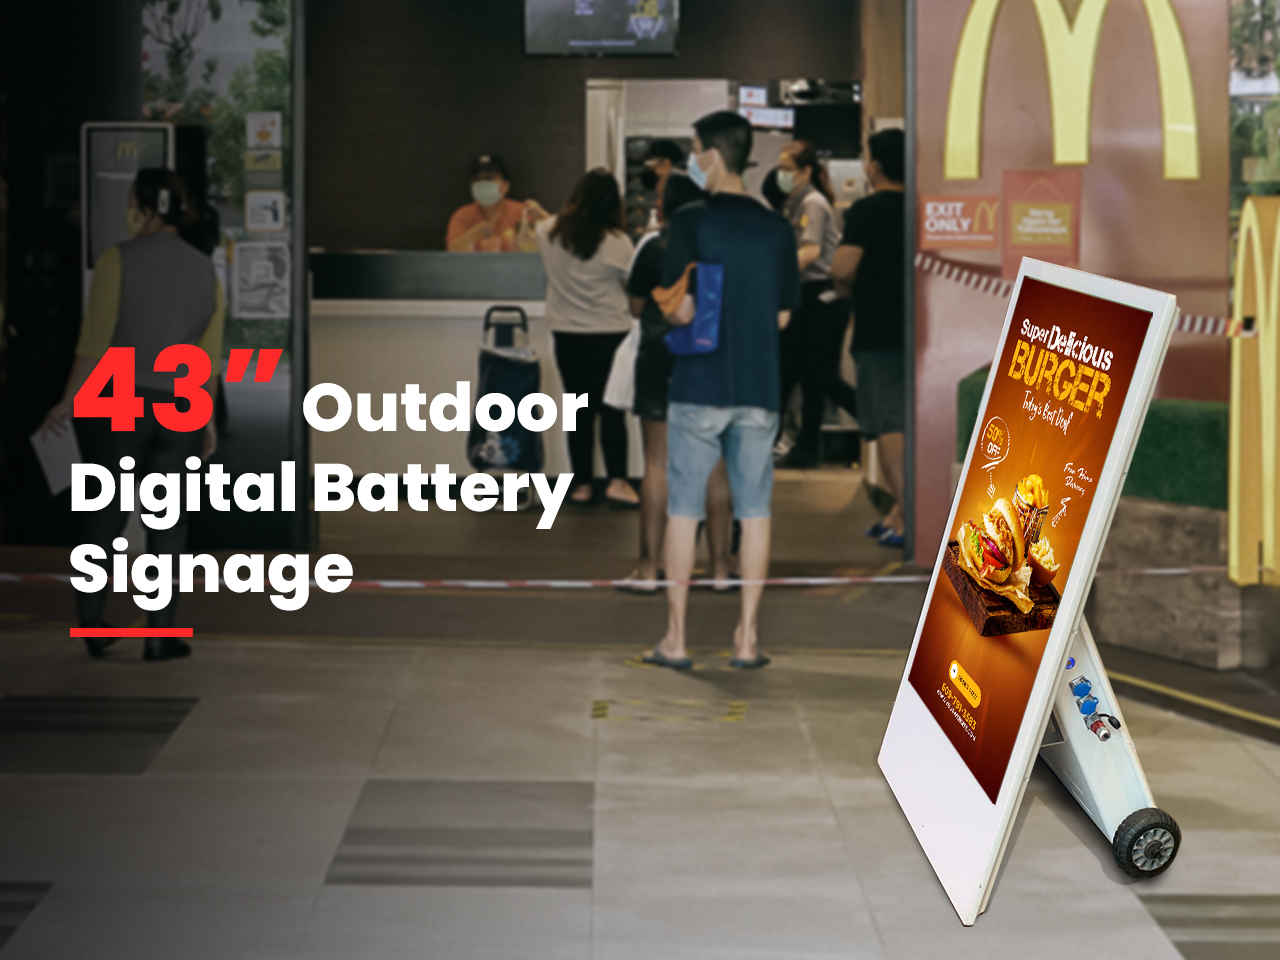 Allsee 43″ Outdoor Digital Battery Signage For McDonald’s Outlet